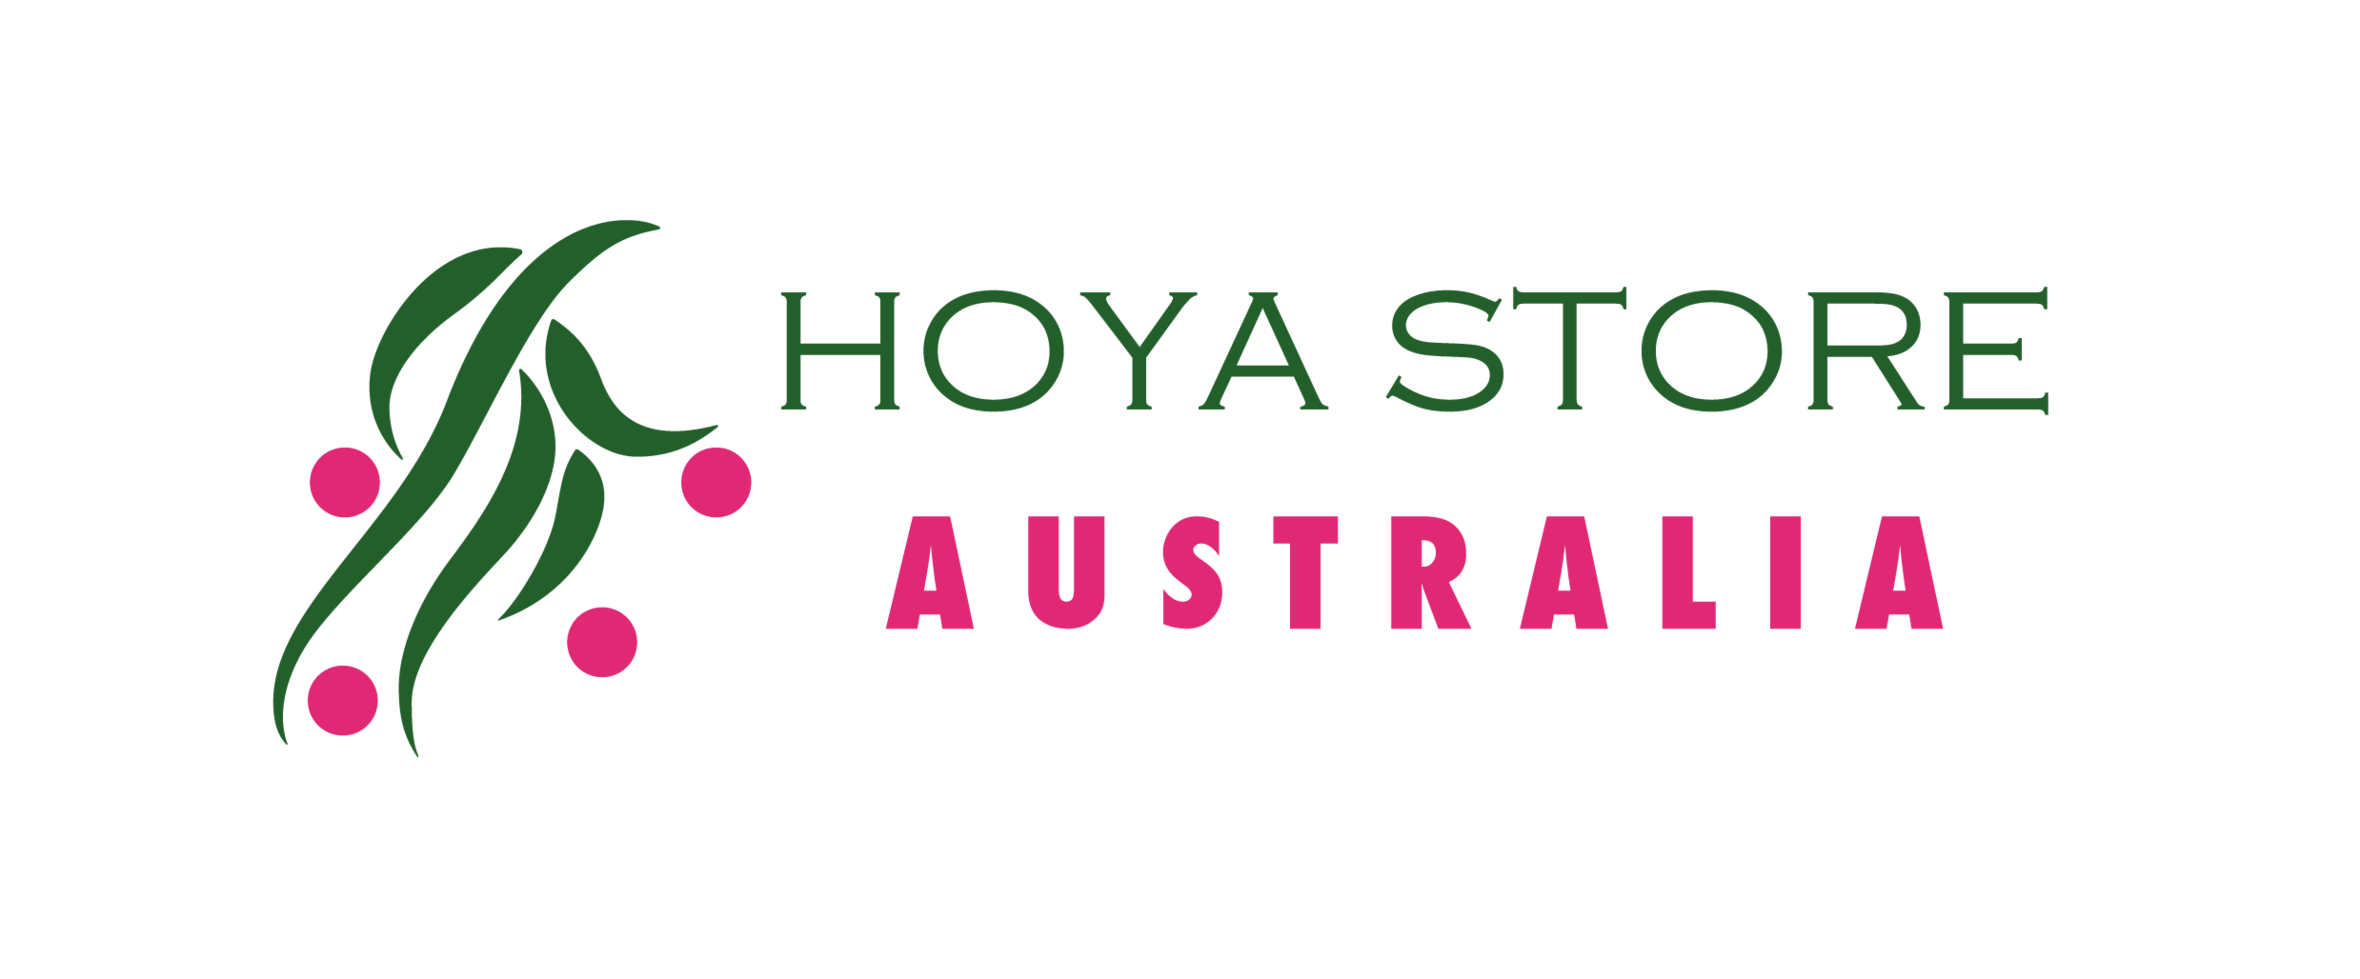 Hoya Store Australia